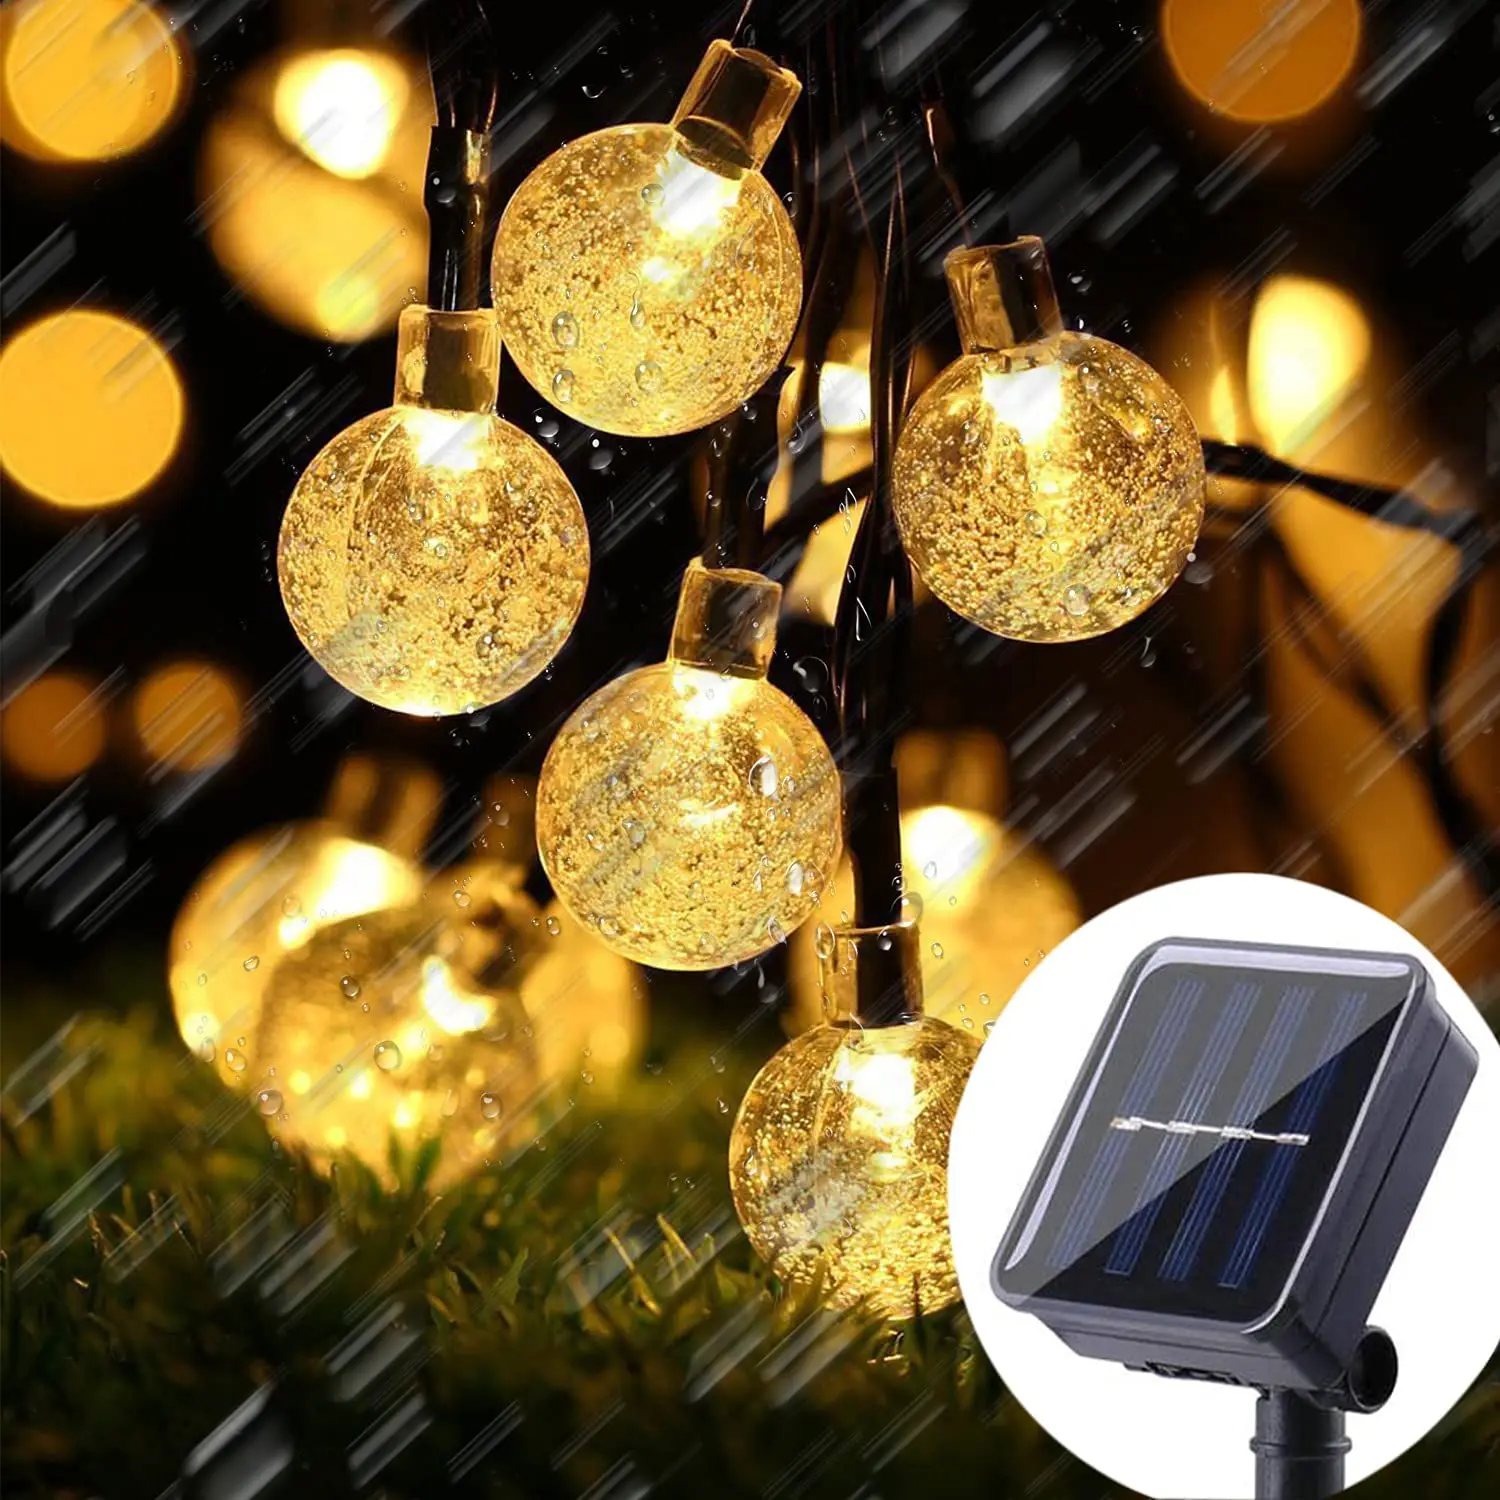 LED Solar Battery Power Fairy Lights String Lamps Party Xmas Deco Garden Outdoor 